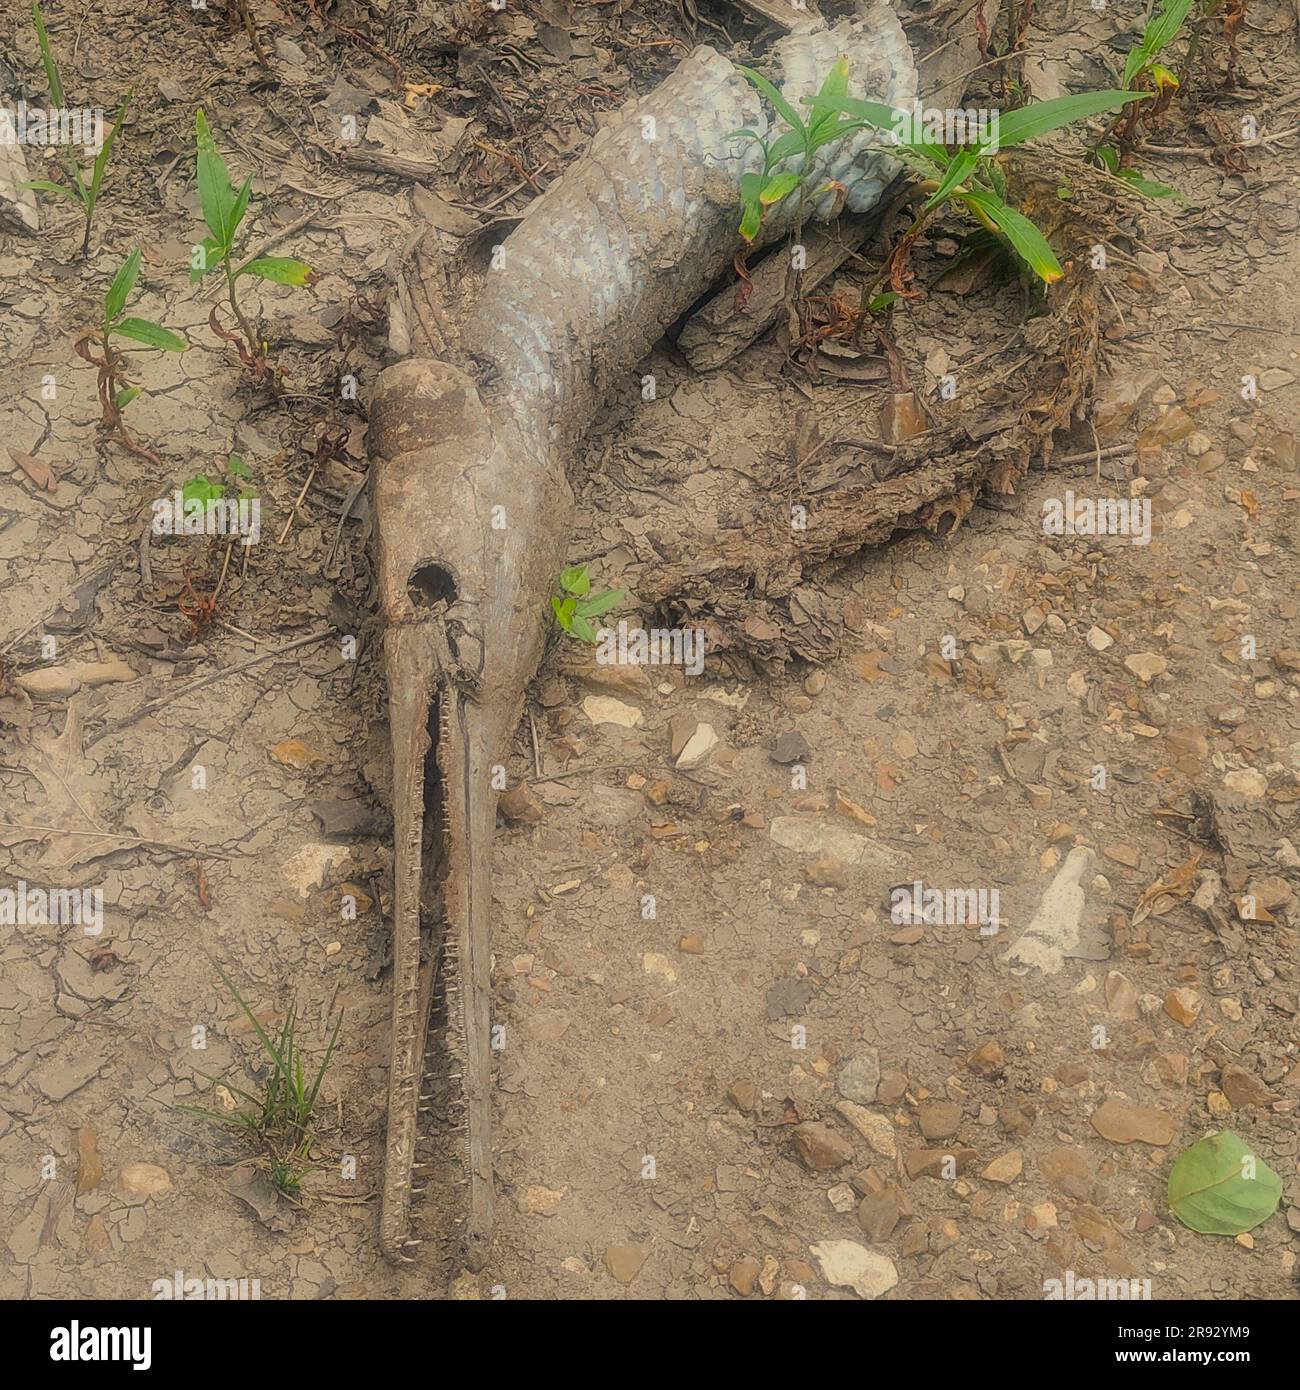 Dead Longnose Gar (Lepisosteus osseus), on the riverbank. Stock Photo